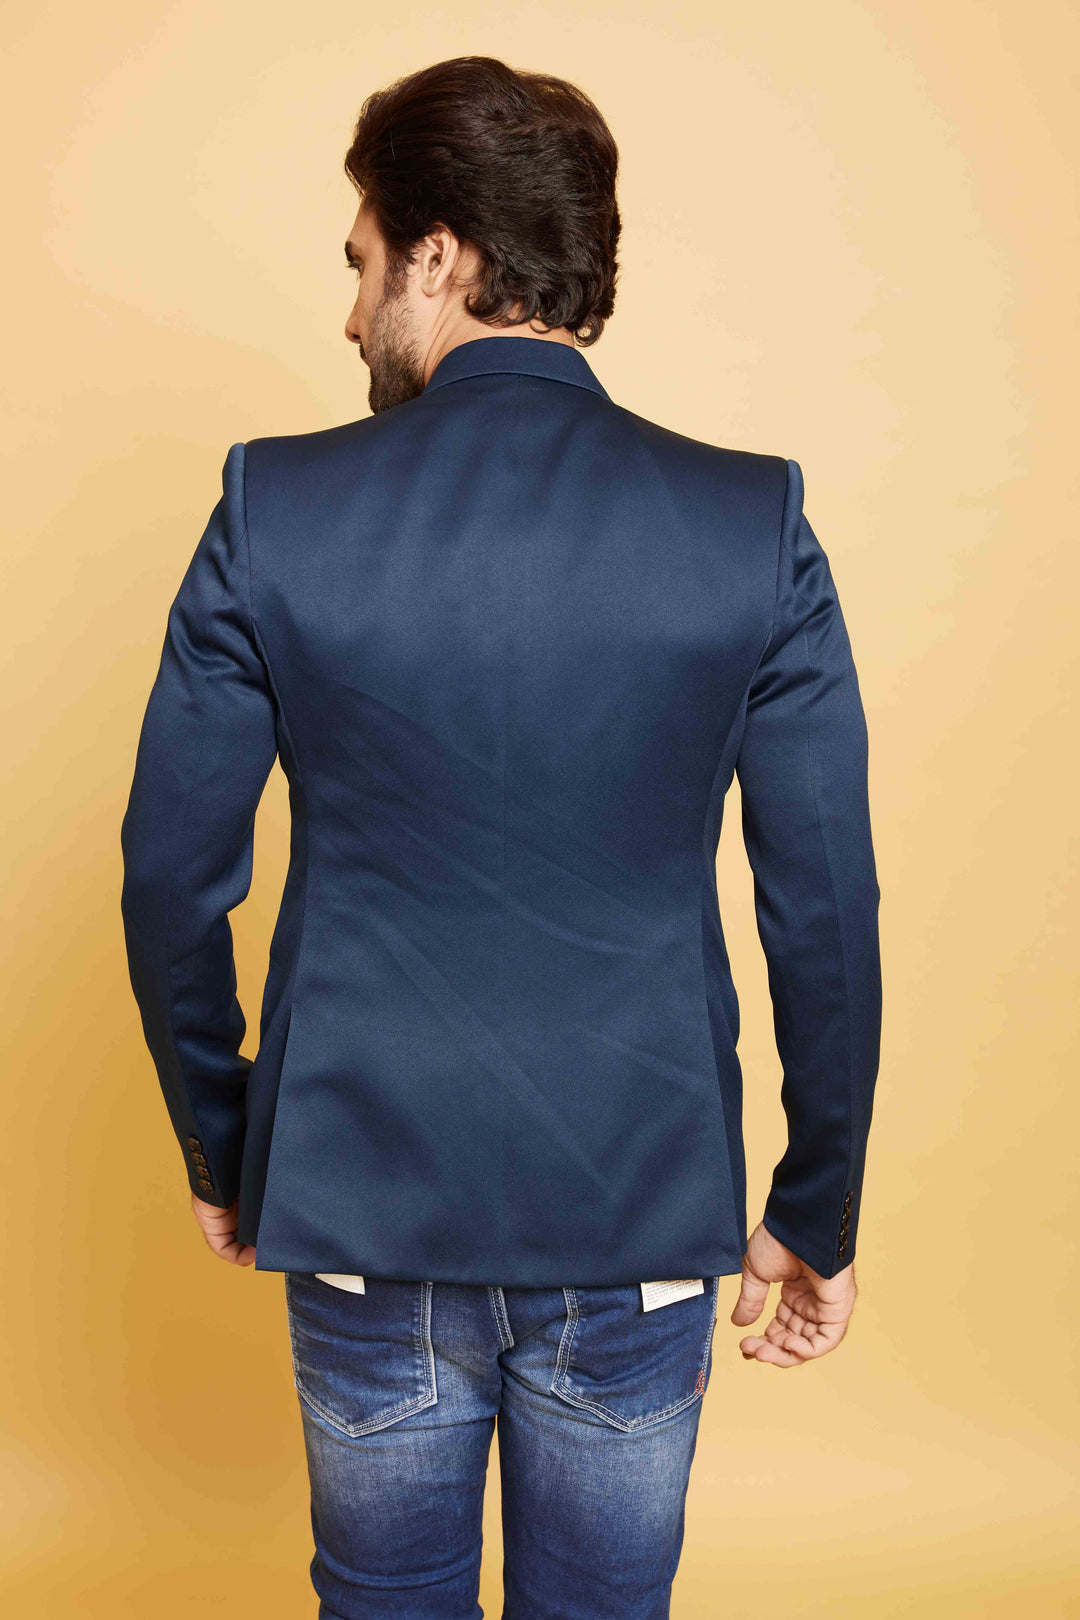 Blue Blazer Jacket with Pocket Pattern